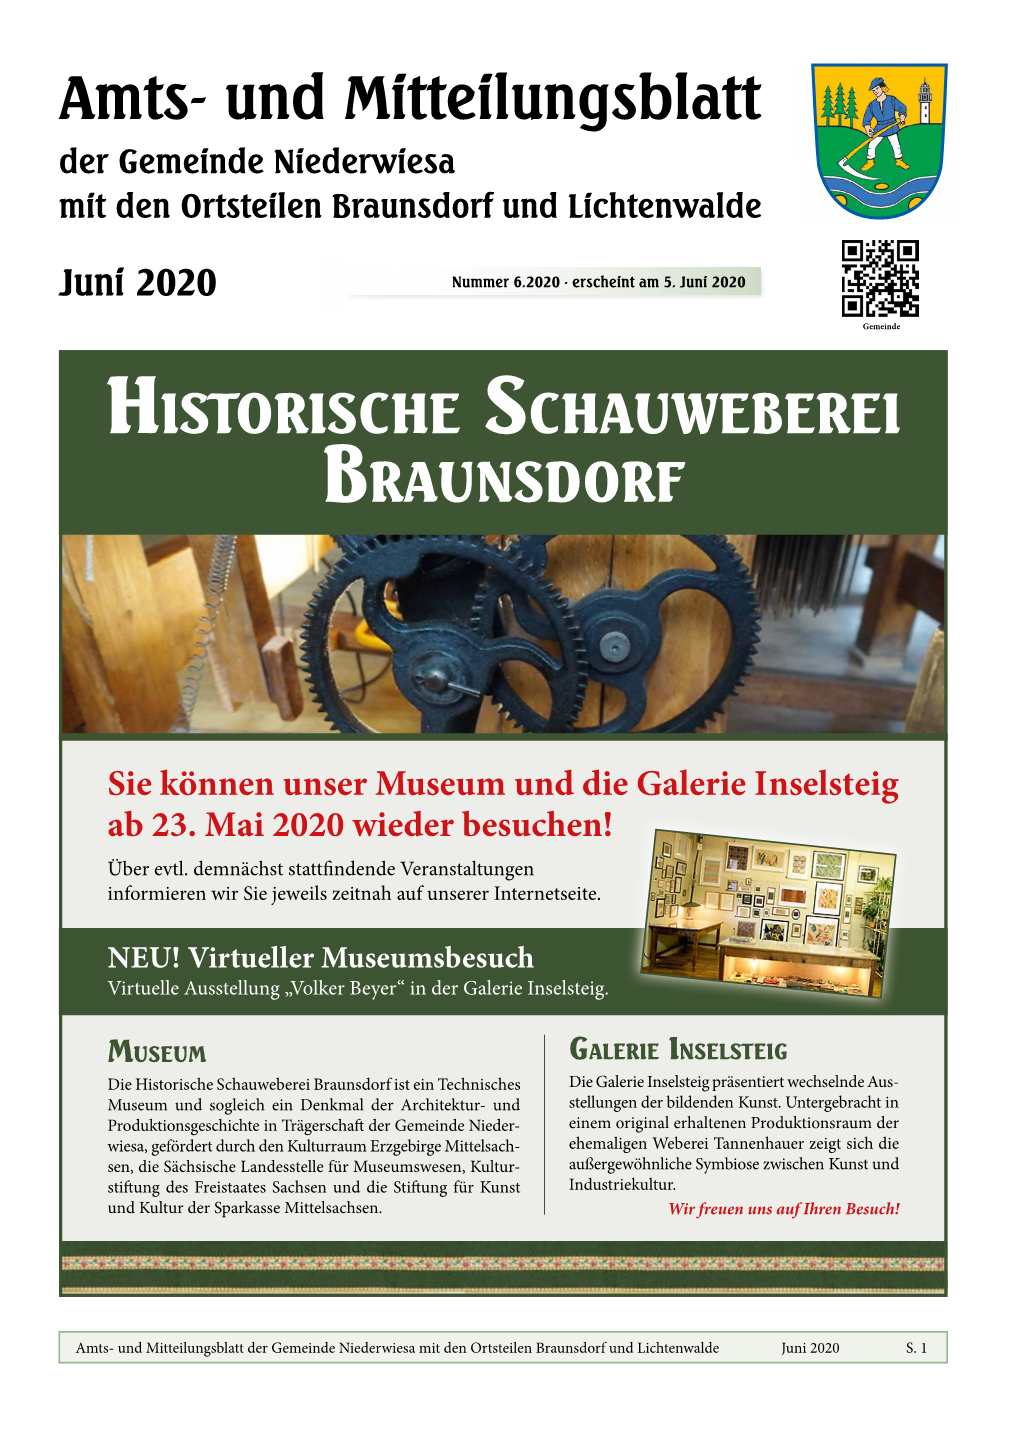 Amtsblatt Niederwiesa – Juni 2020